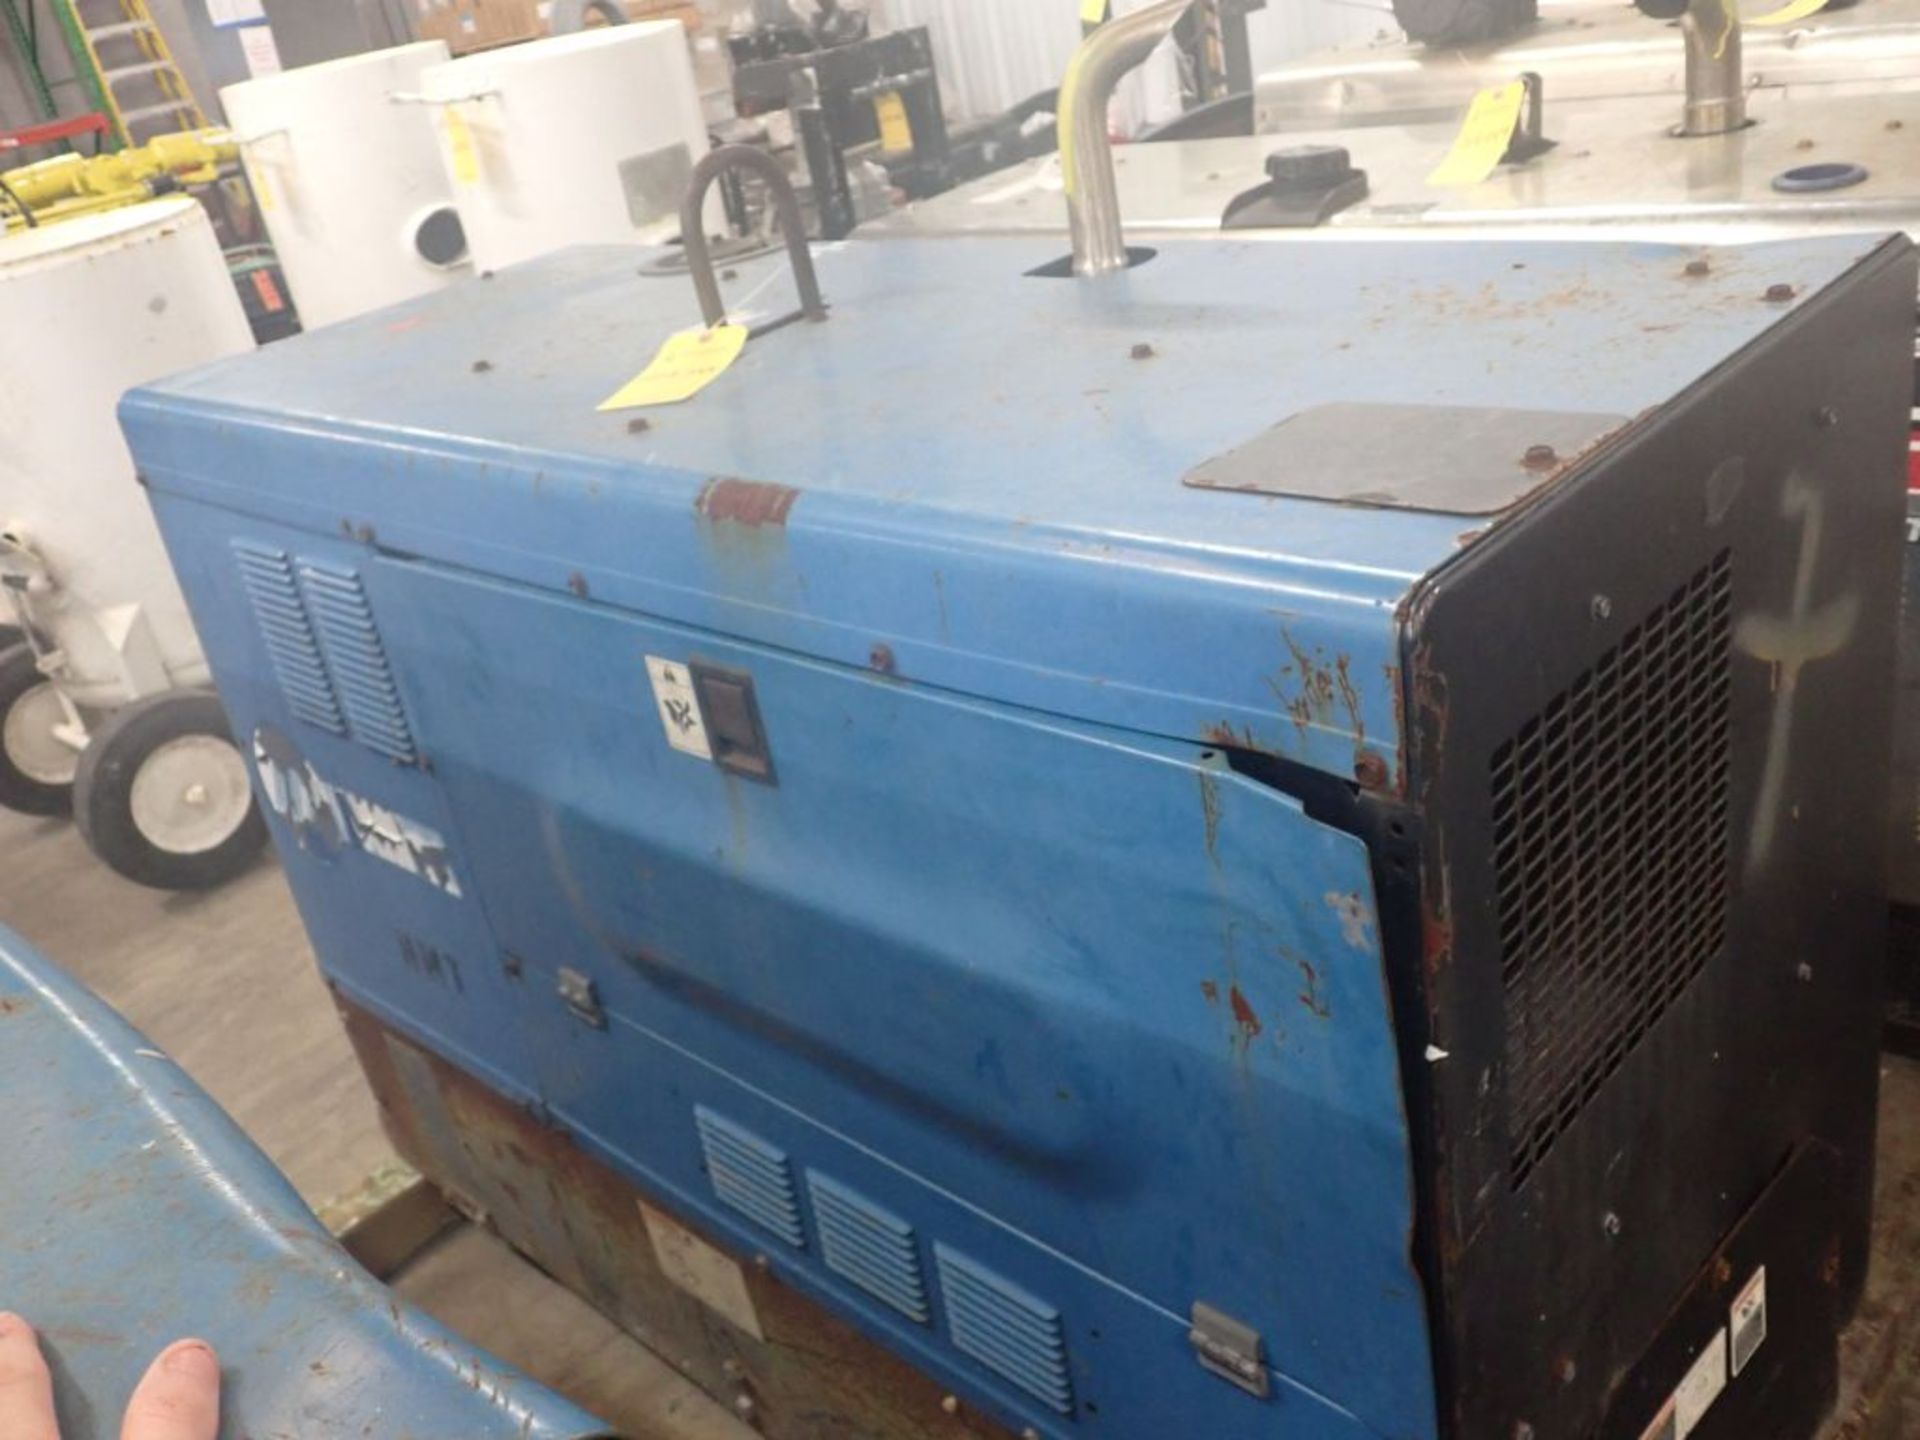 Miller Big Blue 400 D DC Welding Generator | Stock No. 907327; Engine Driven